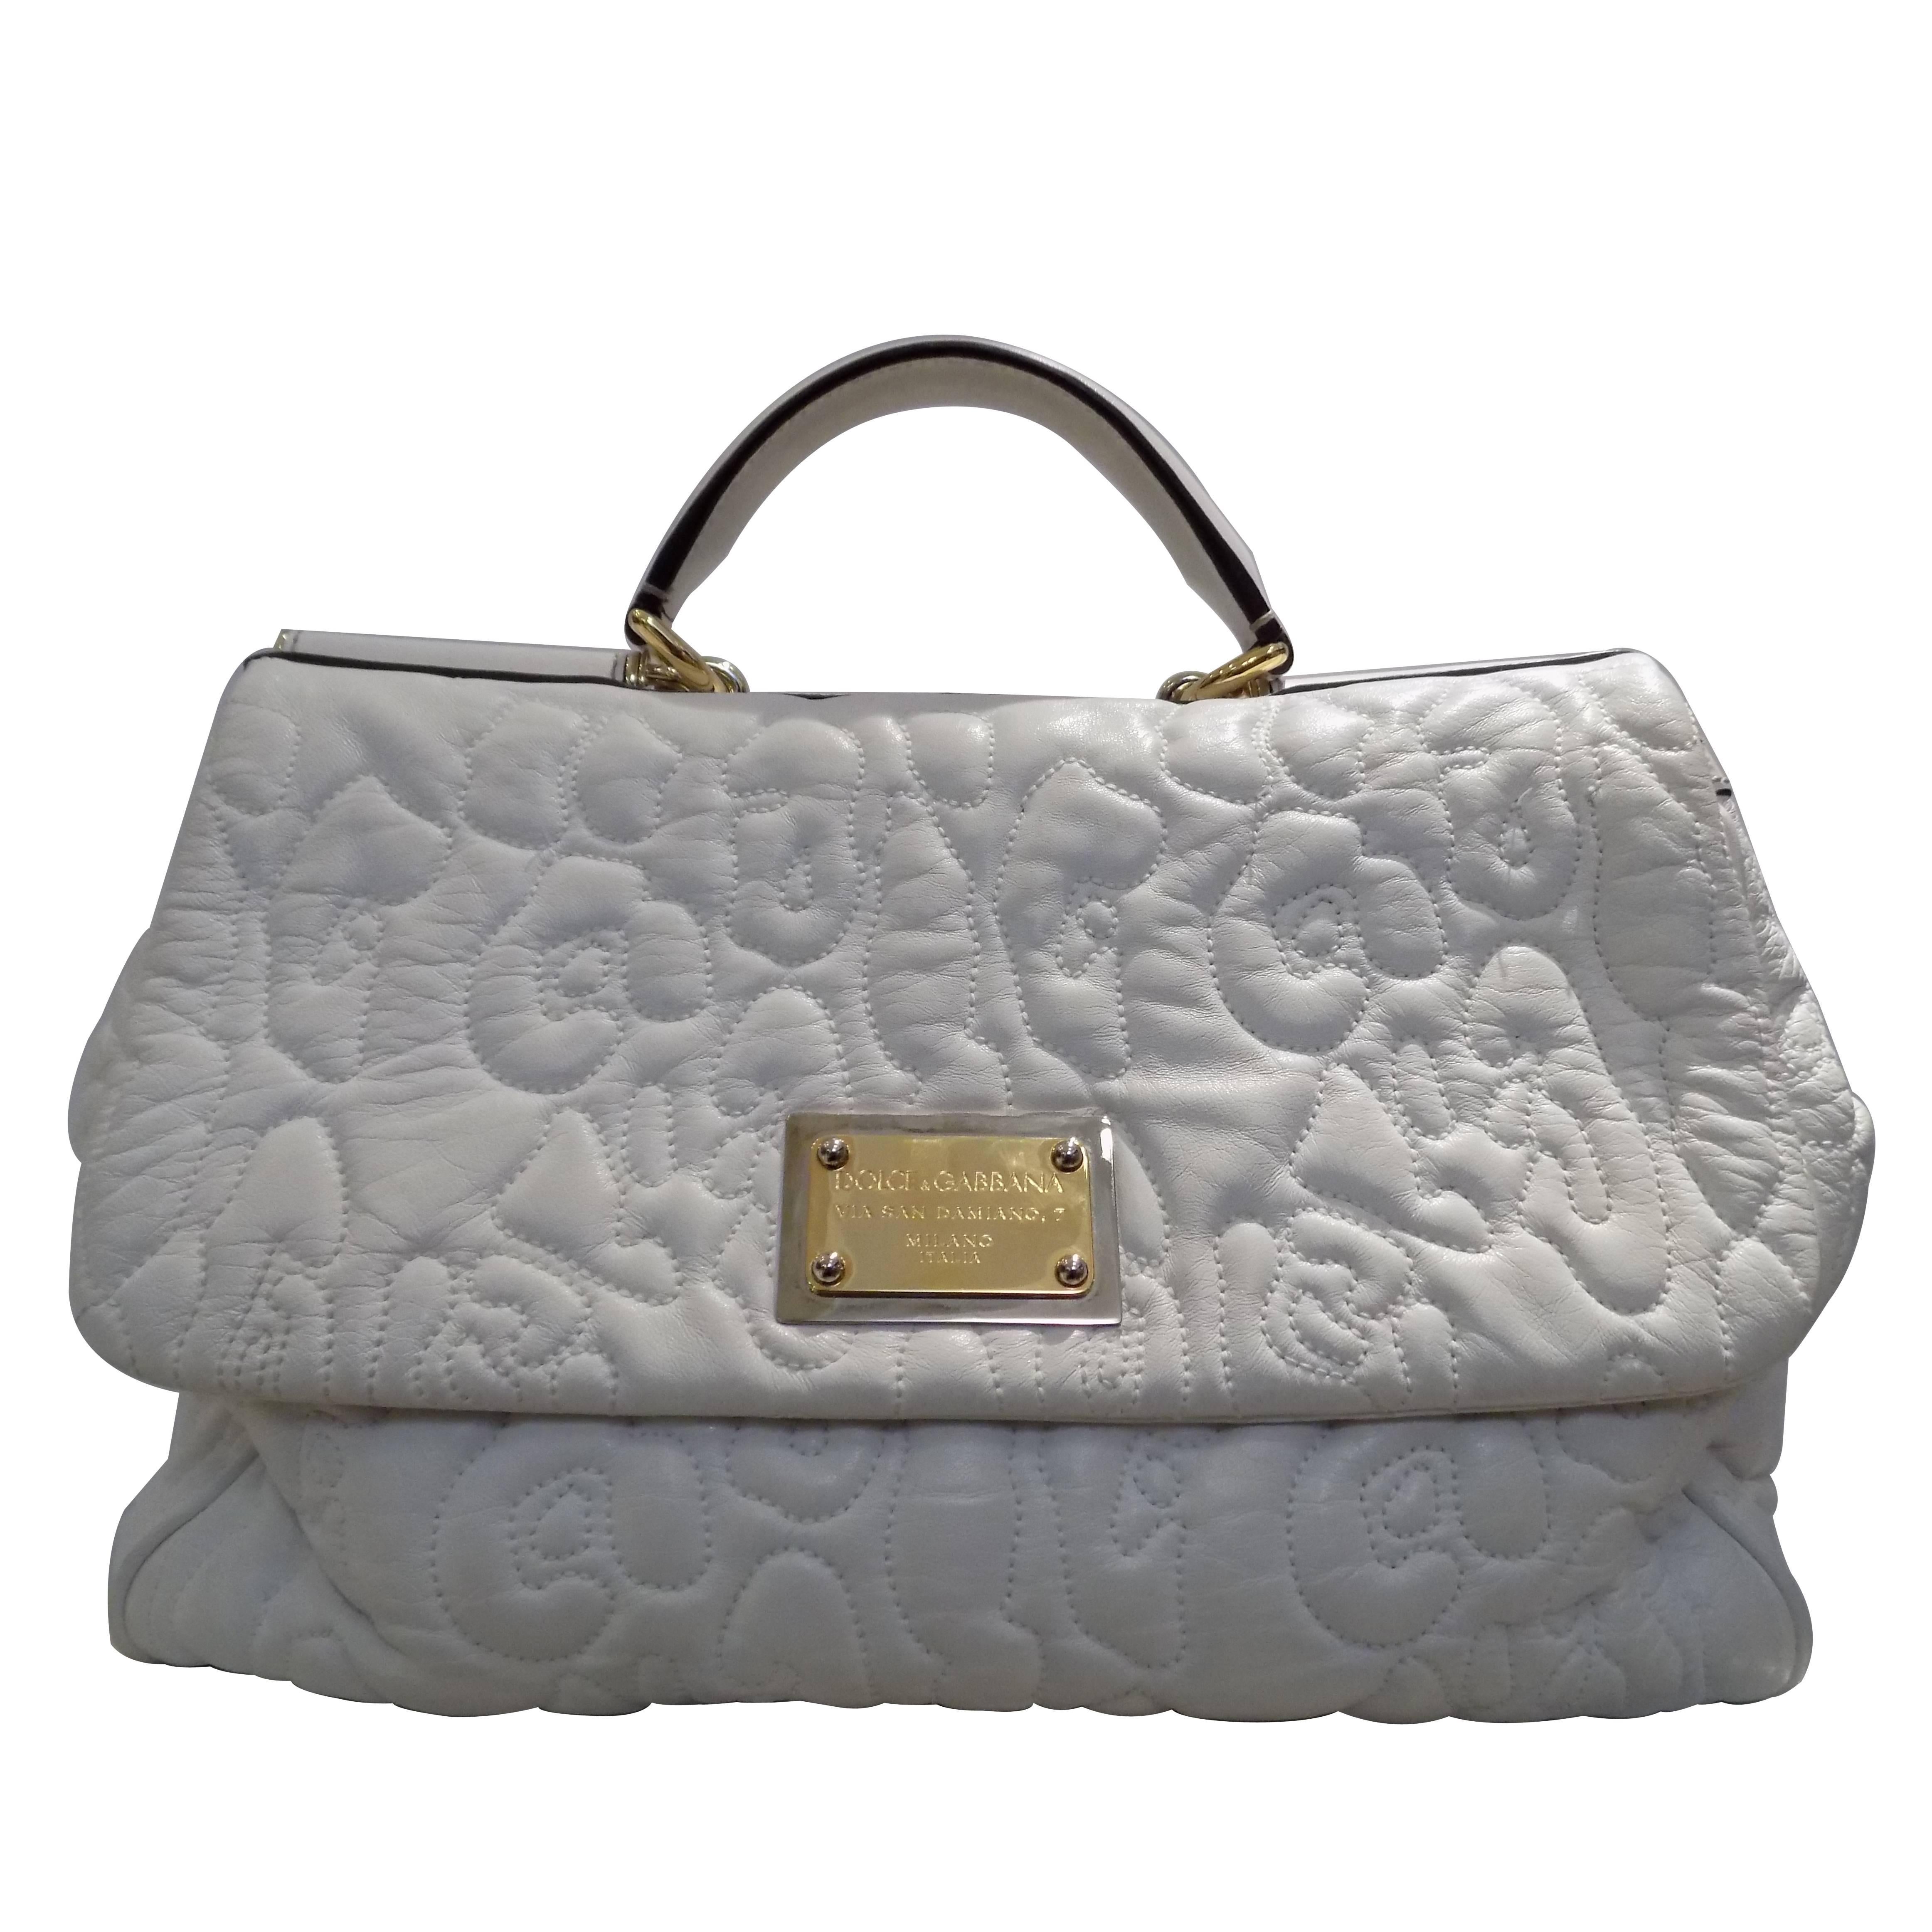 Dolce & Gabbana Miss Sicily white leather bag